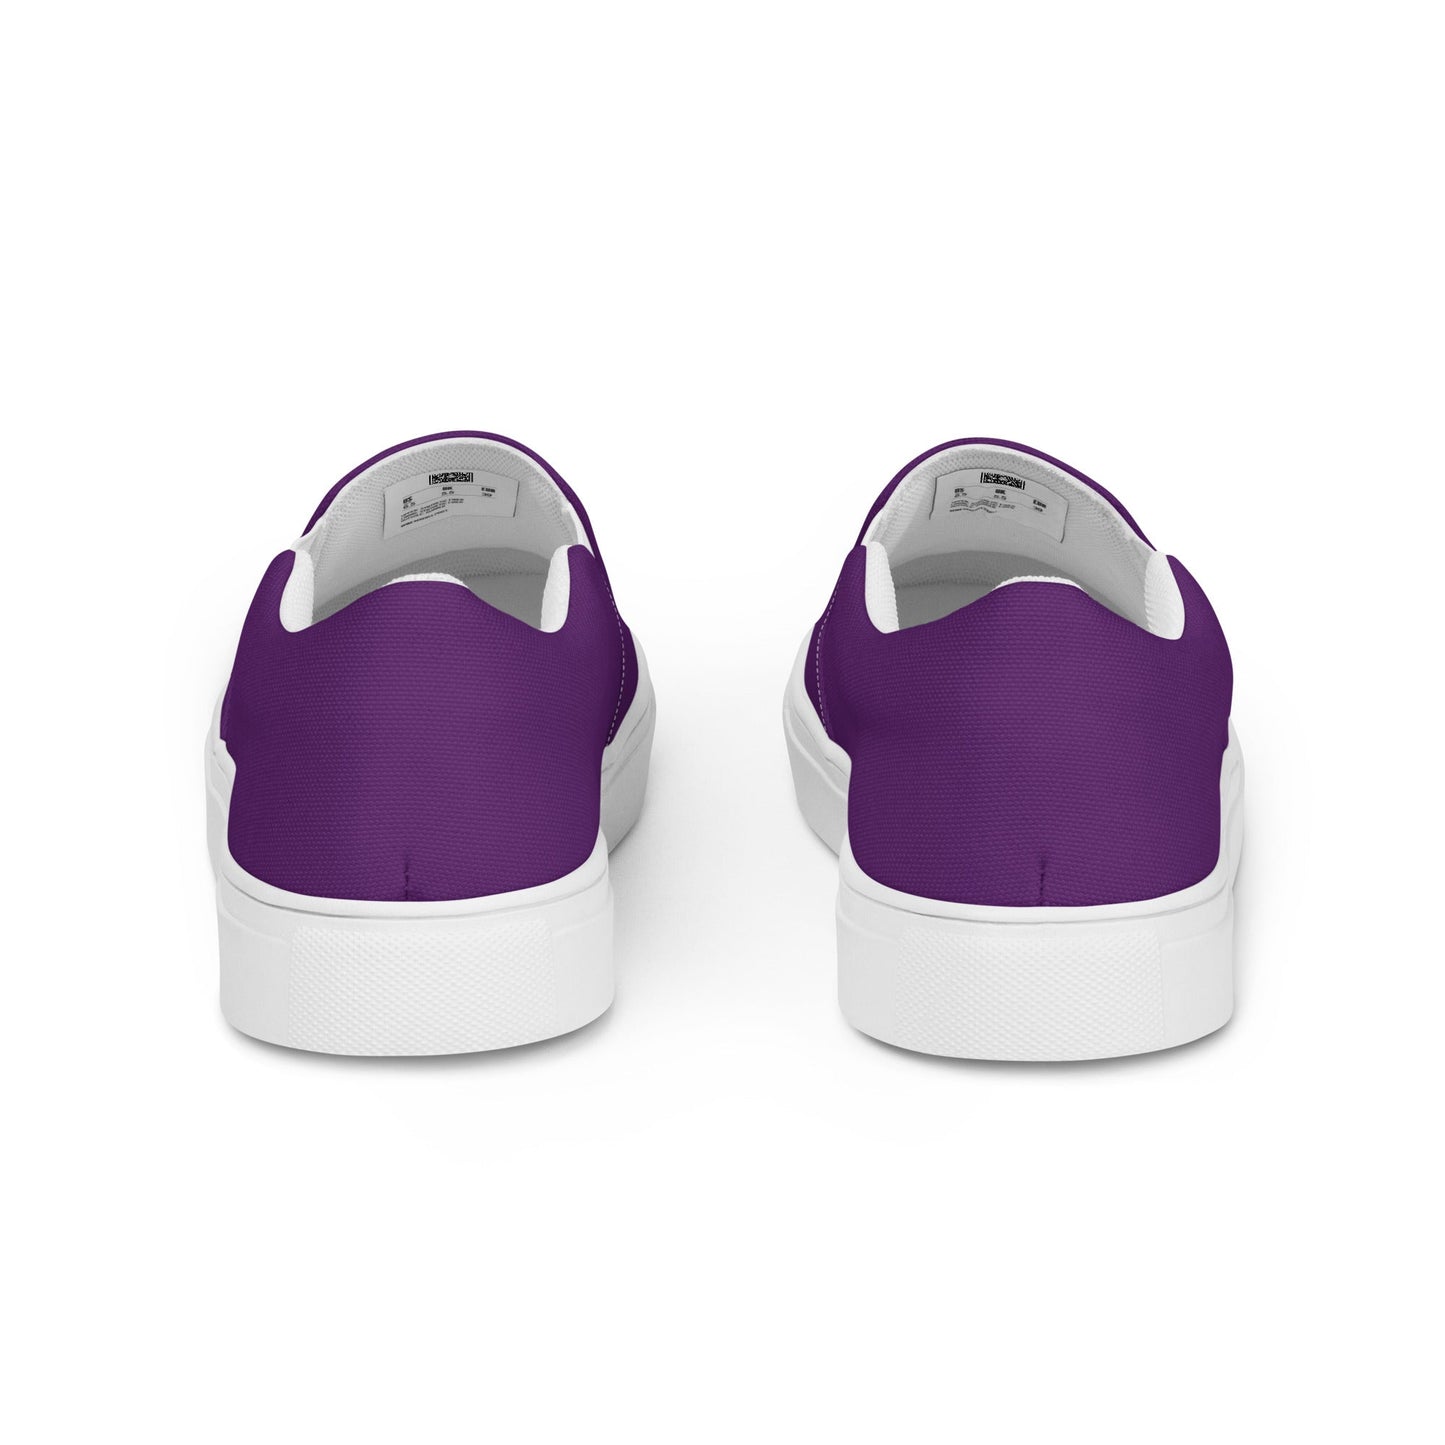 klasneakers Women’s slip-on canvas shoes - Royal Purple